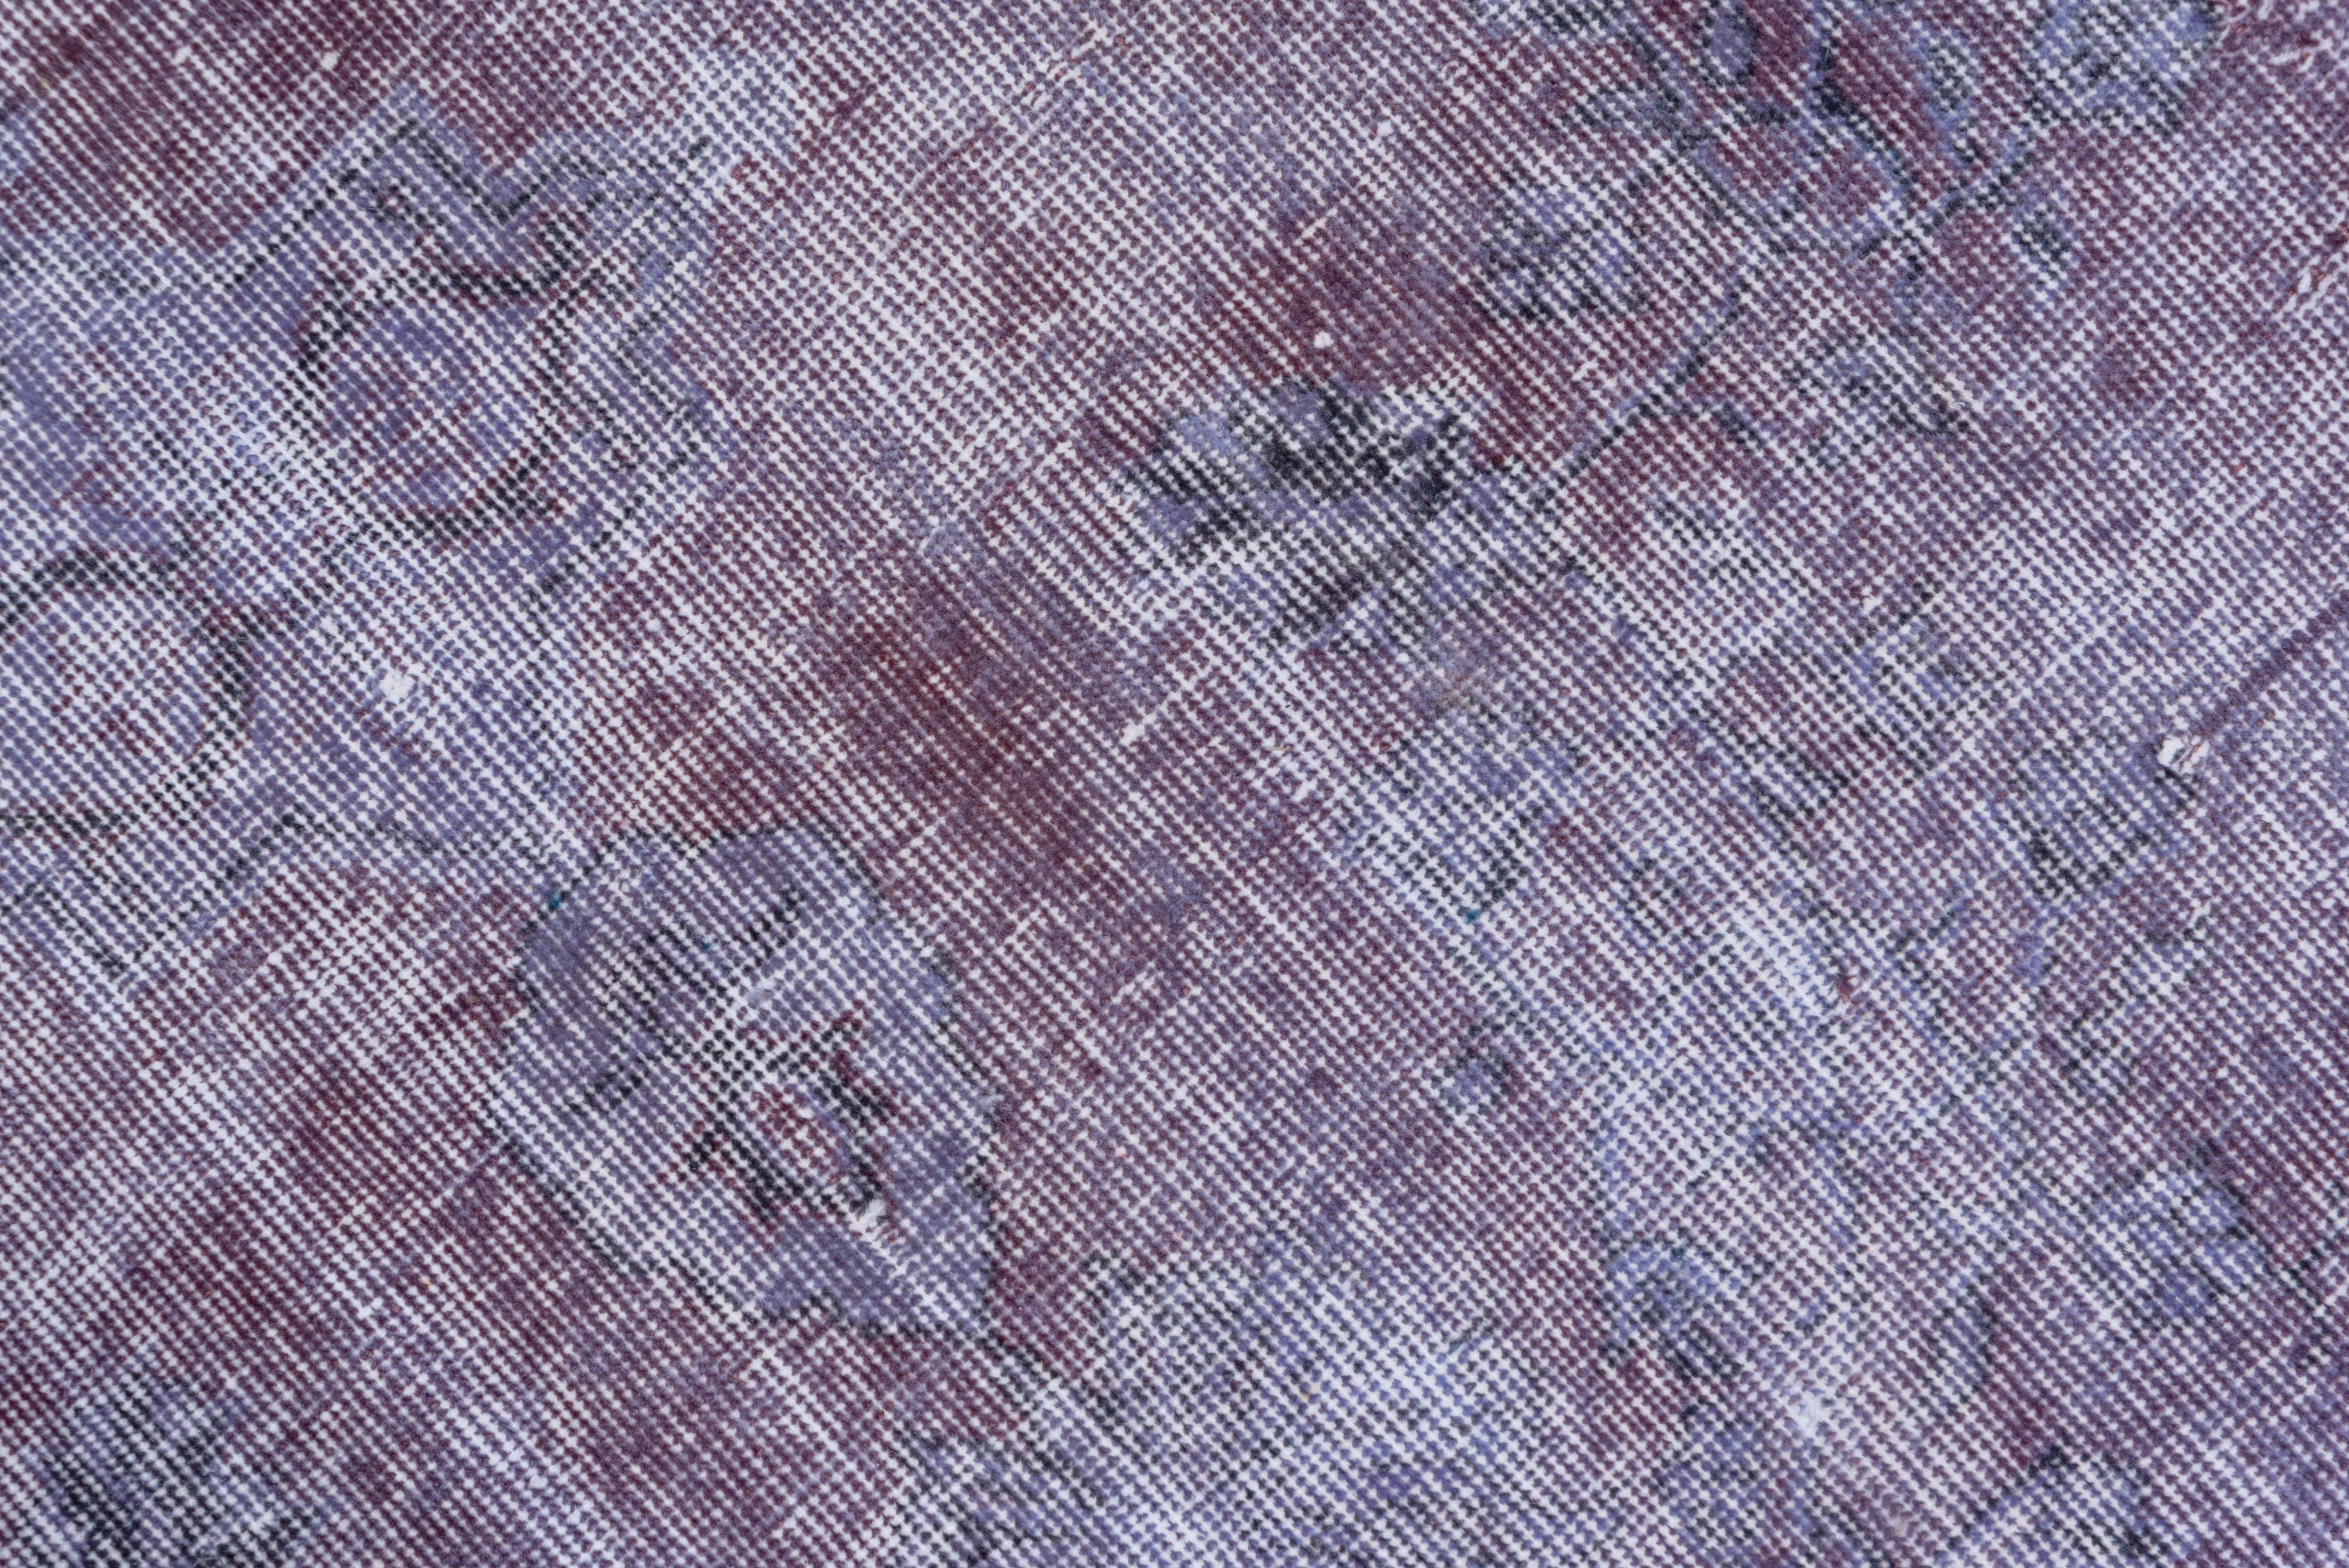 Turkish Overdyed Carpet, Distressed, Violet Tones